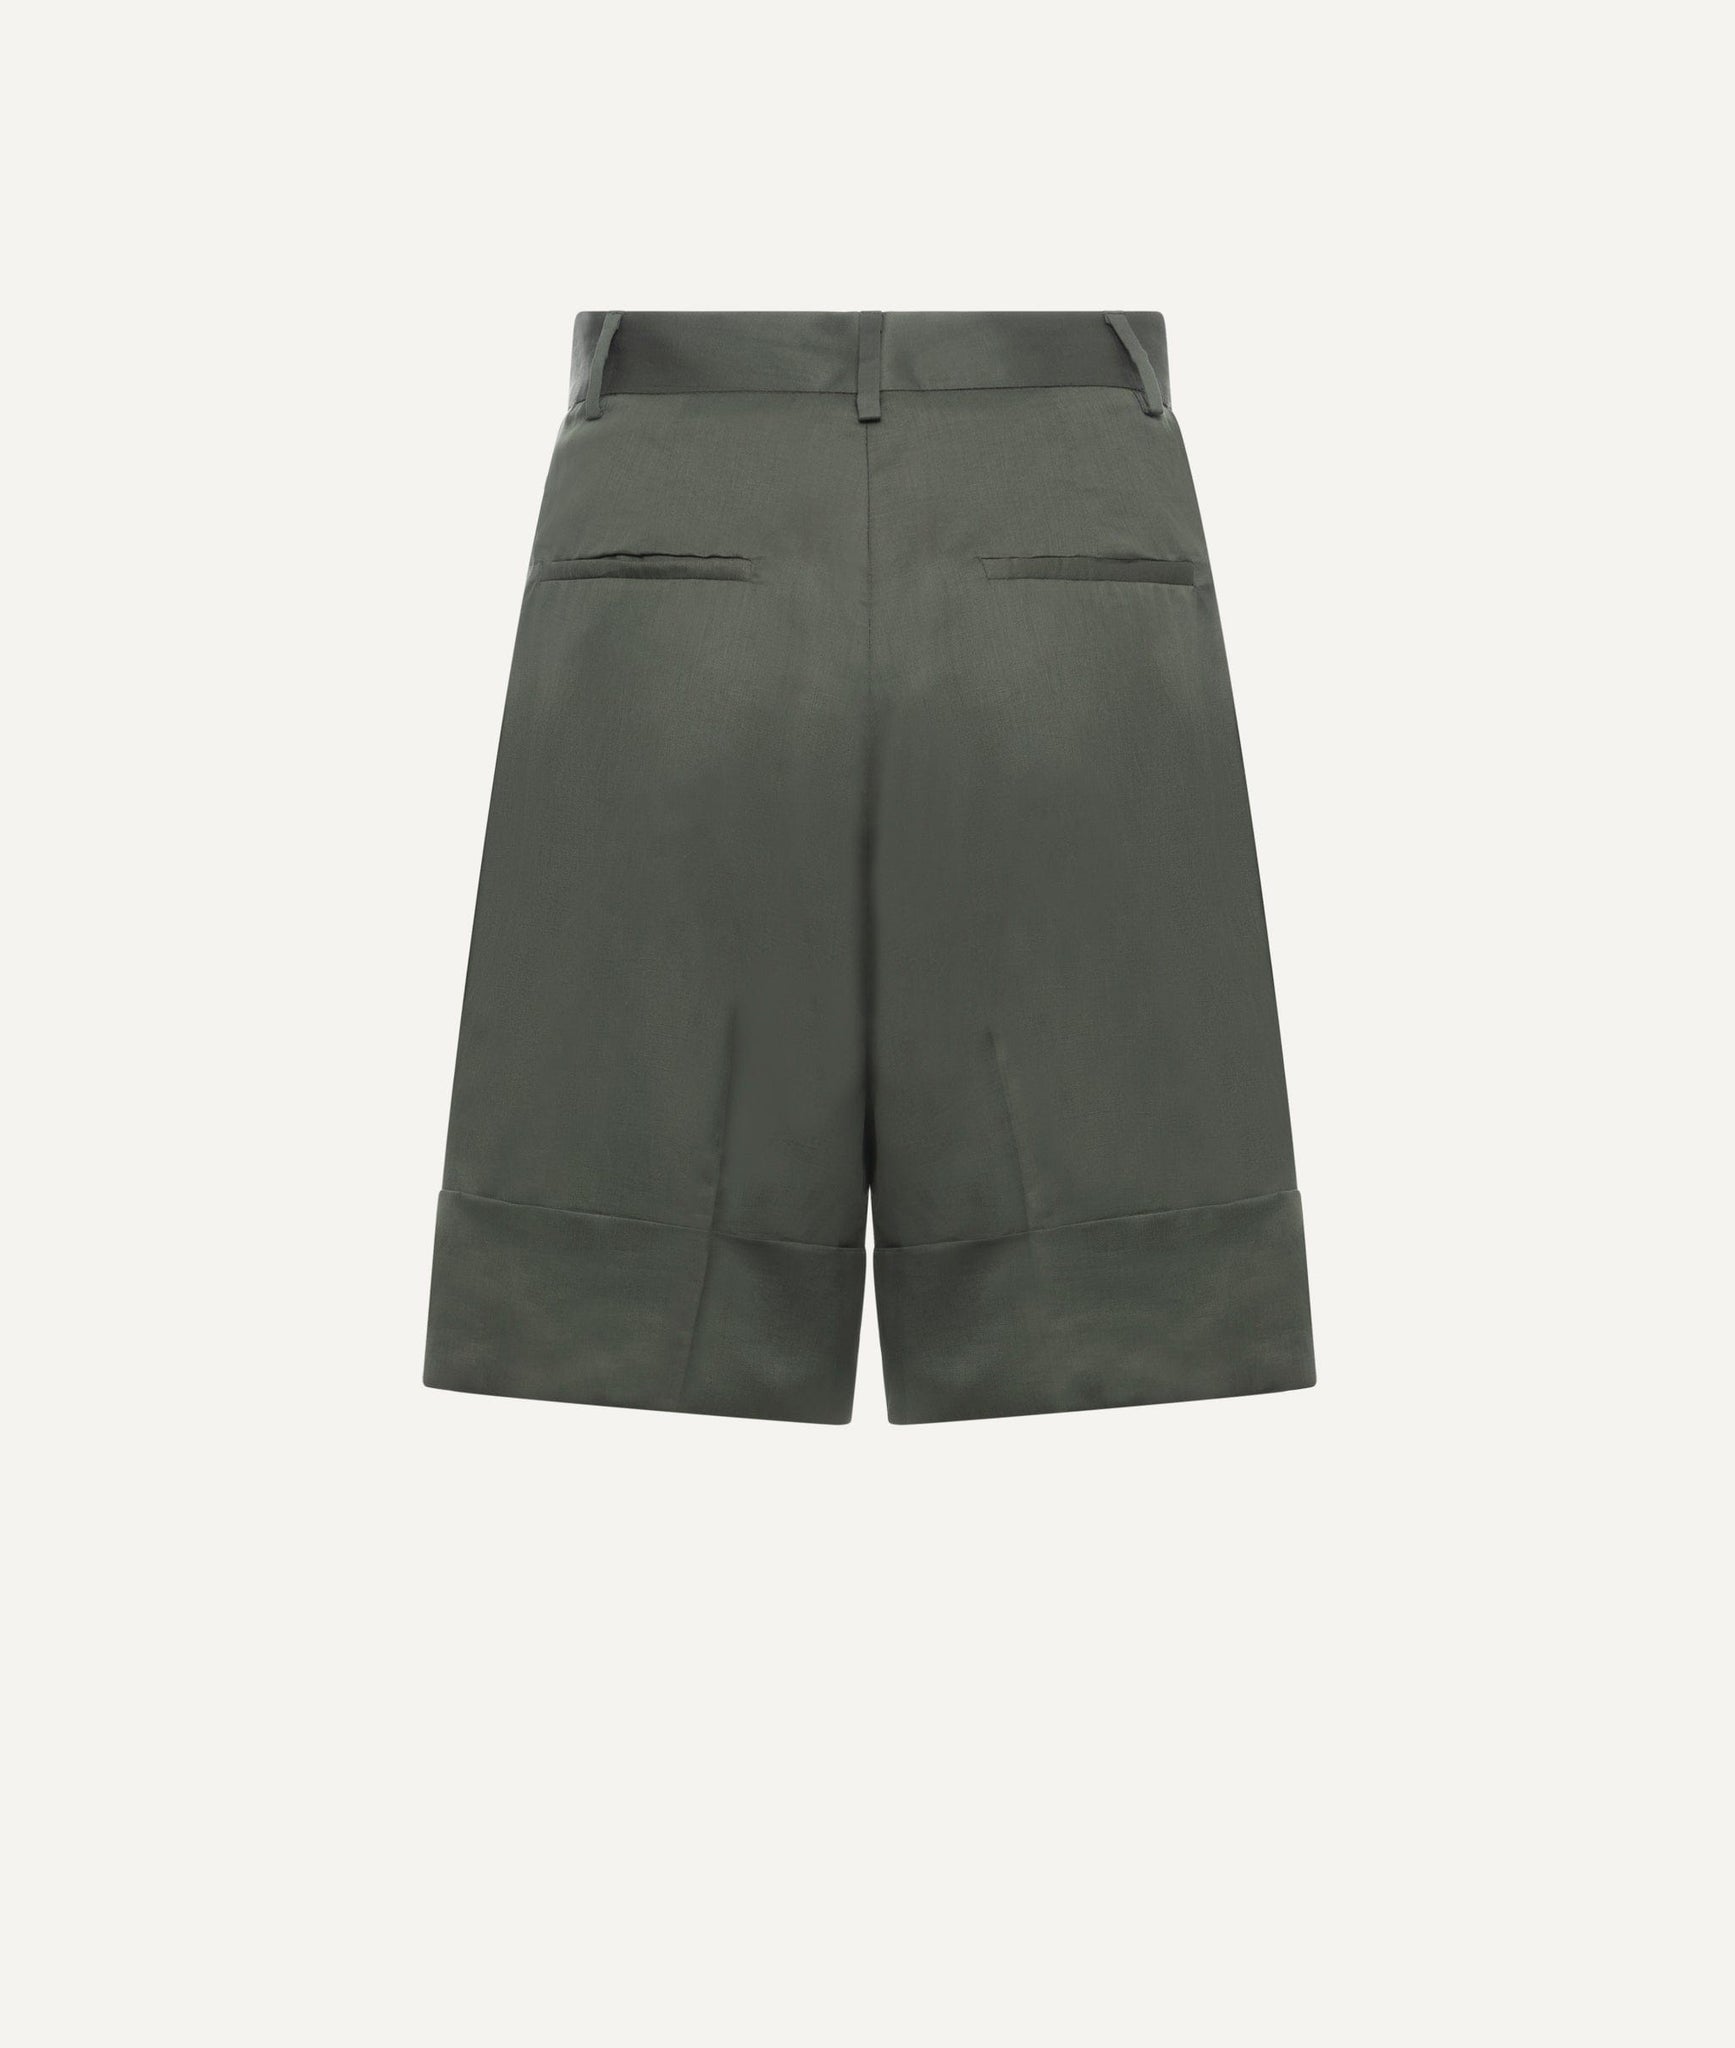 Kiton - Shorts in Cotton & Linen